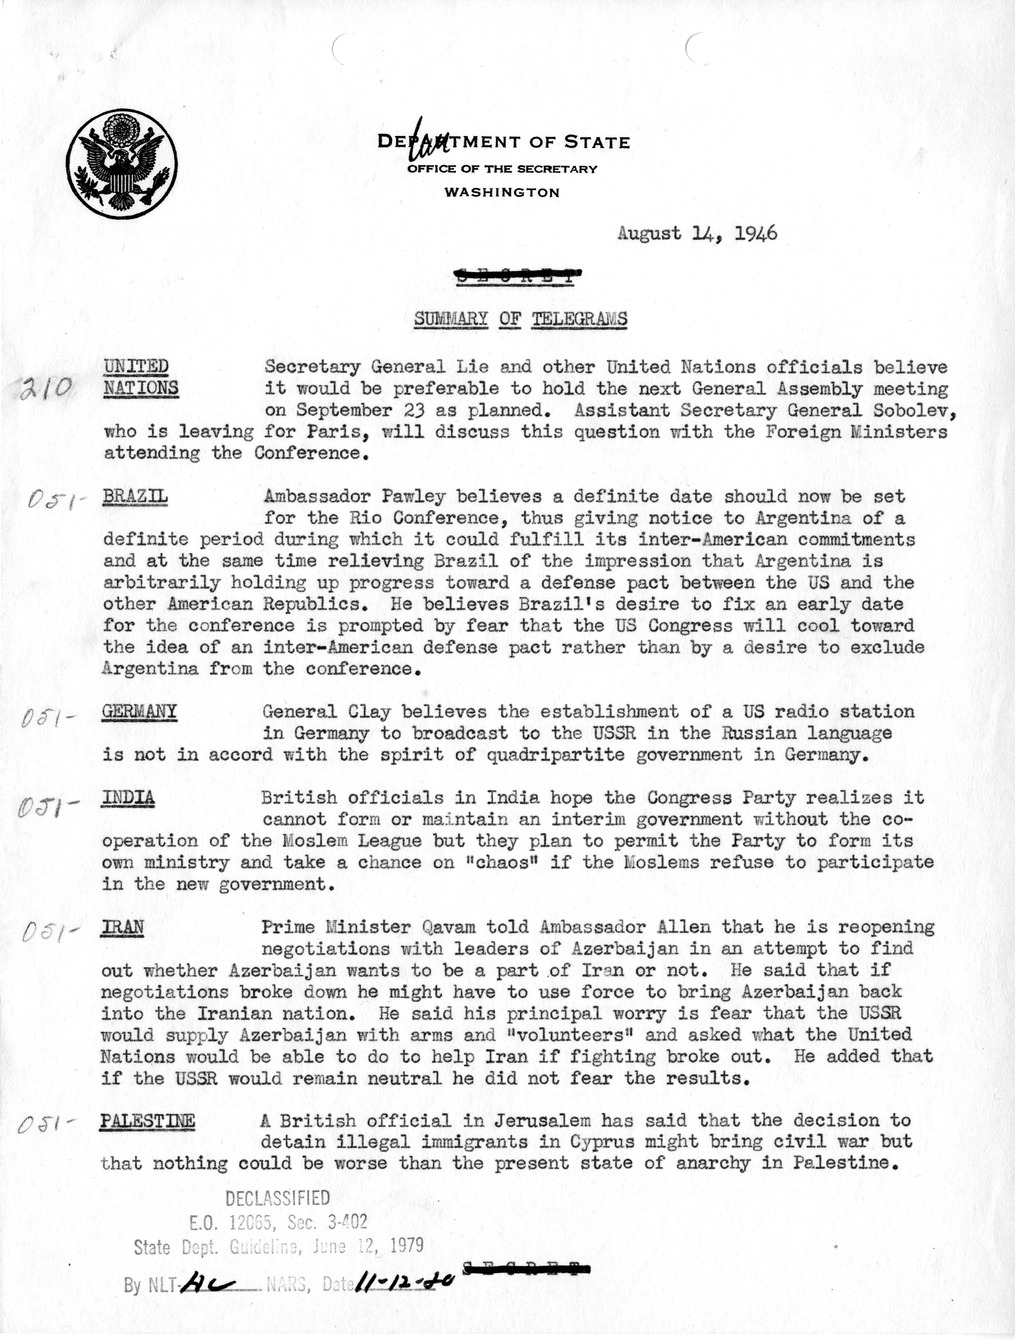 Memorandum, State Department Summary of telegrams